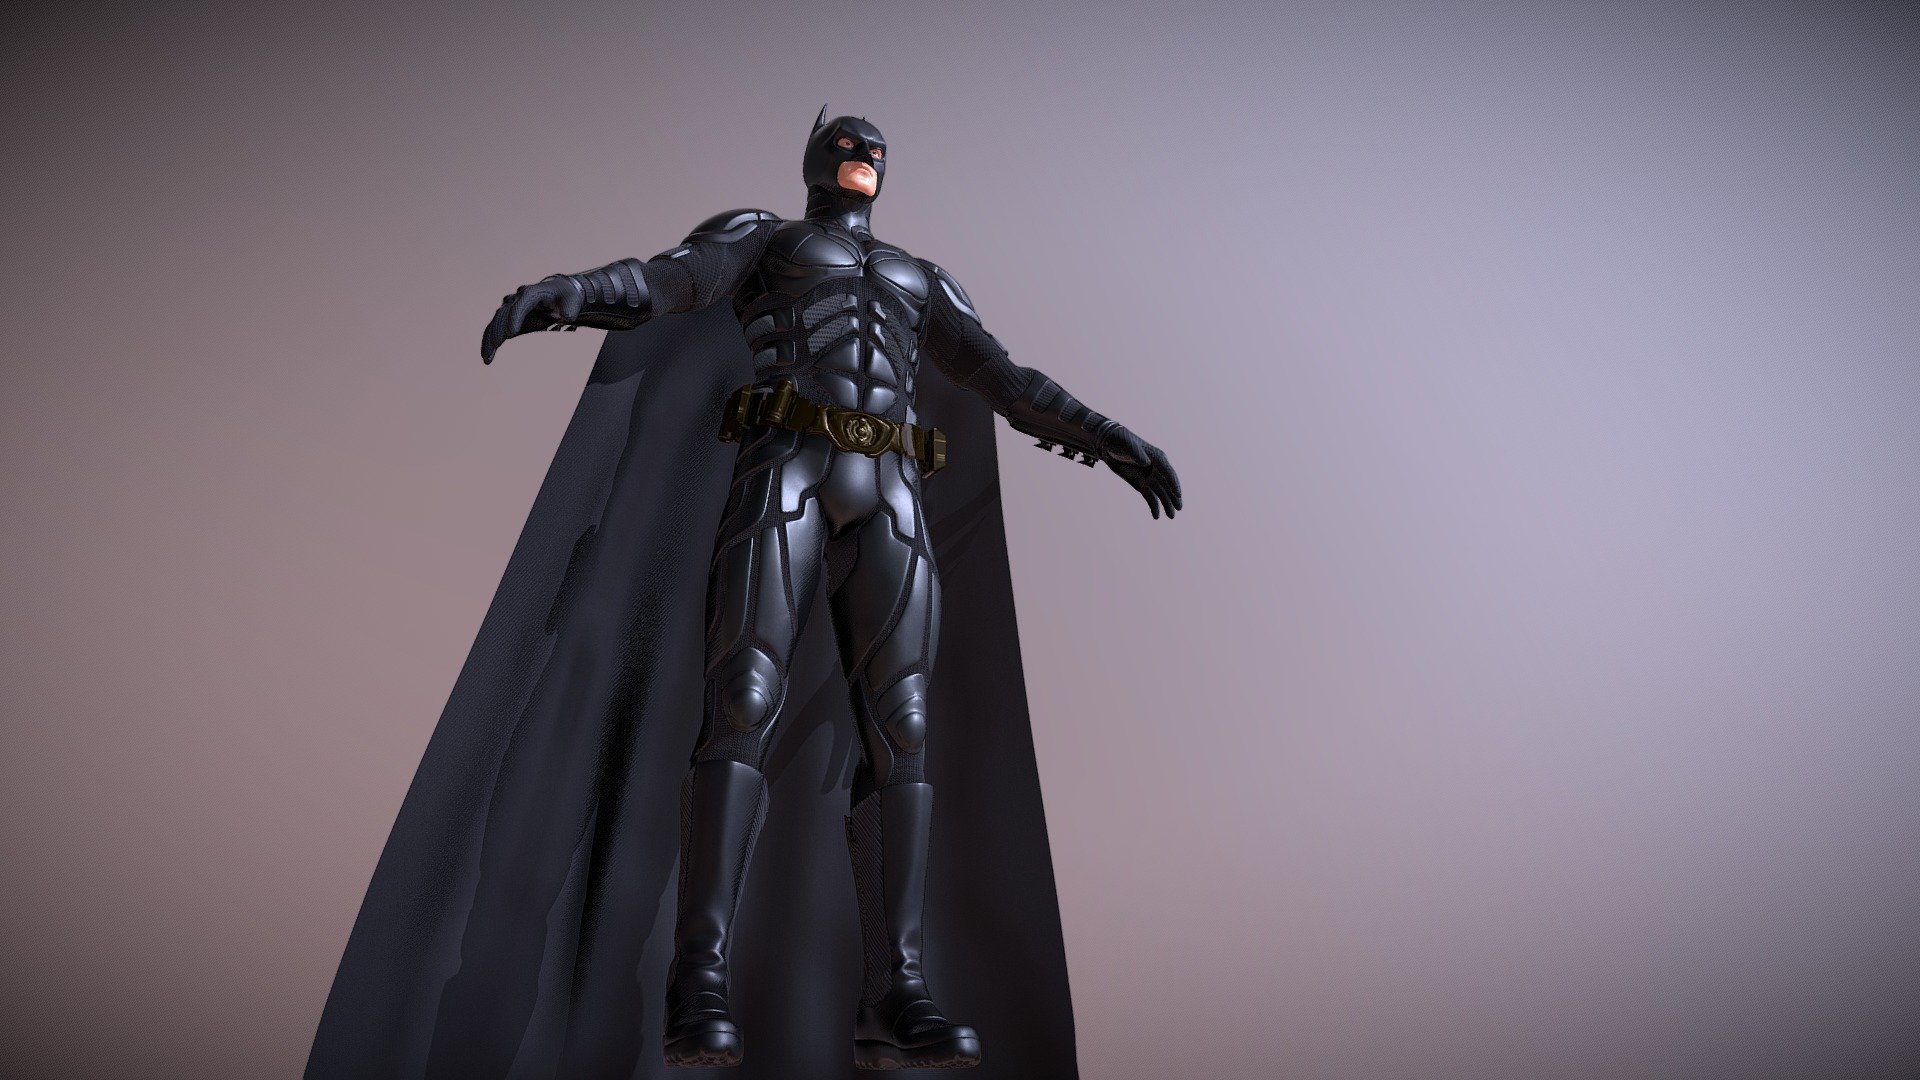 PBR texture 4k resolution - Batman: The Dark Knight - Buy Royalty Free 3D model by uday14viru 3d model